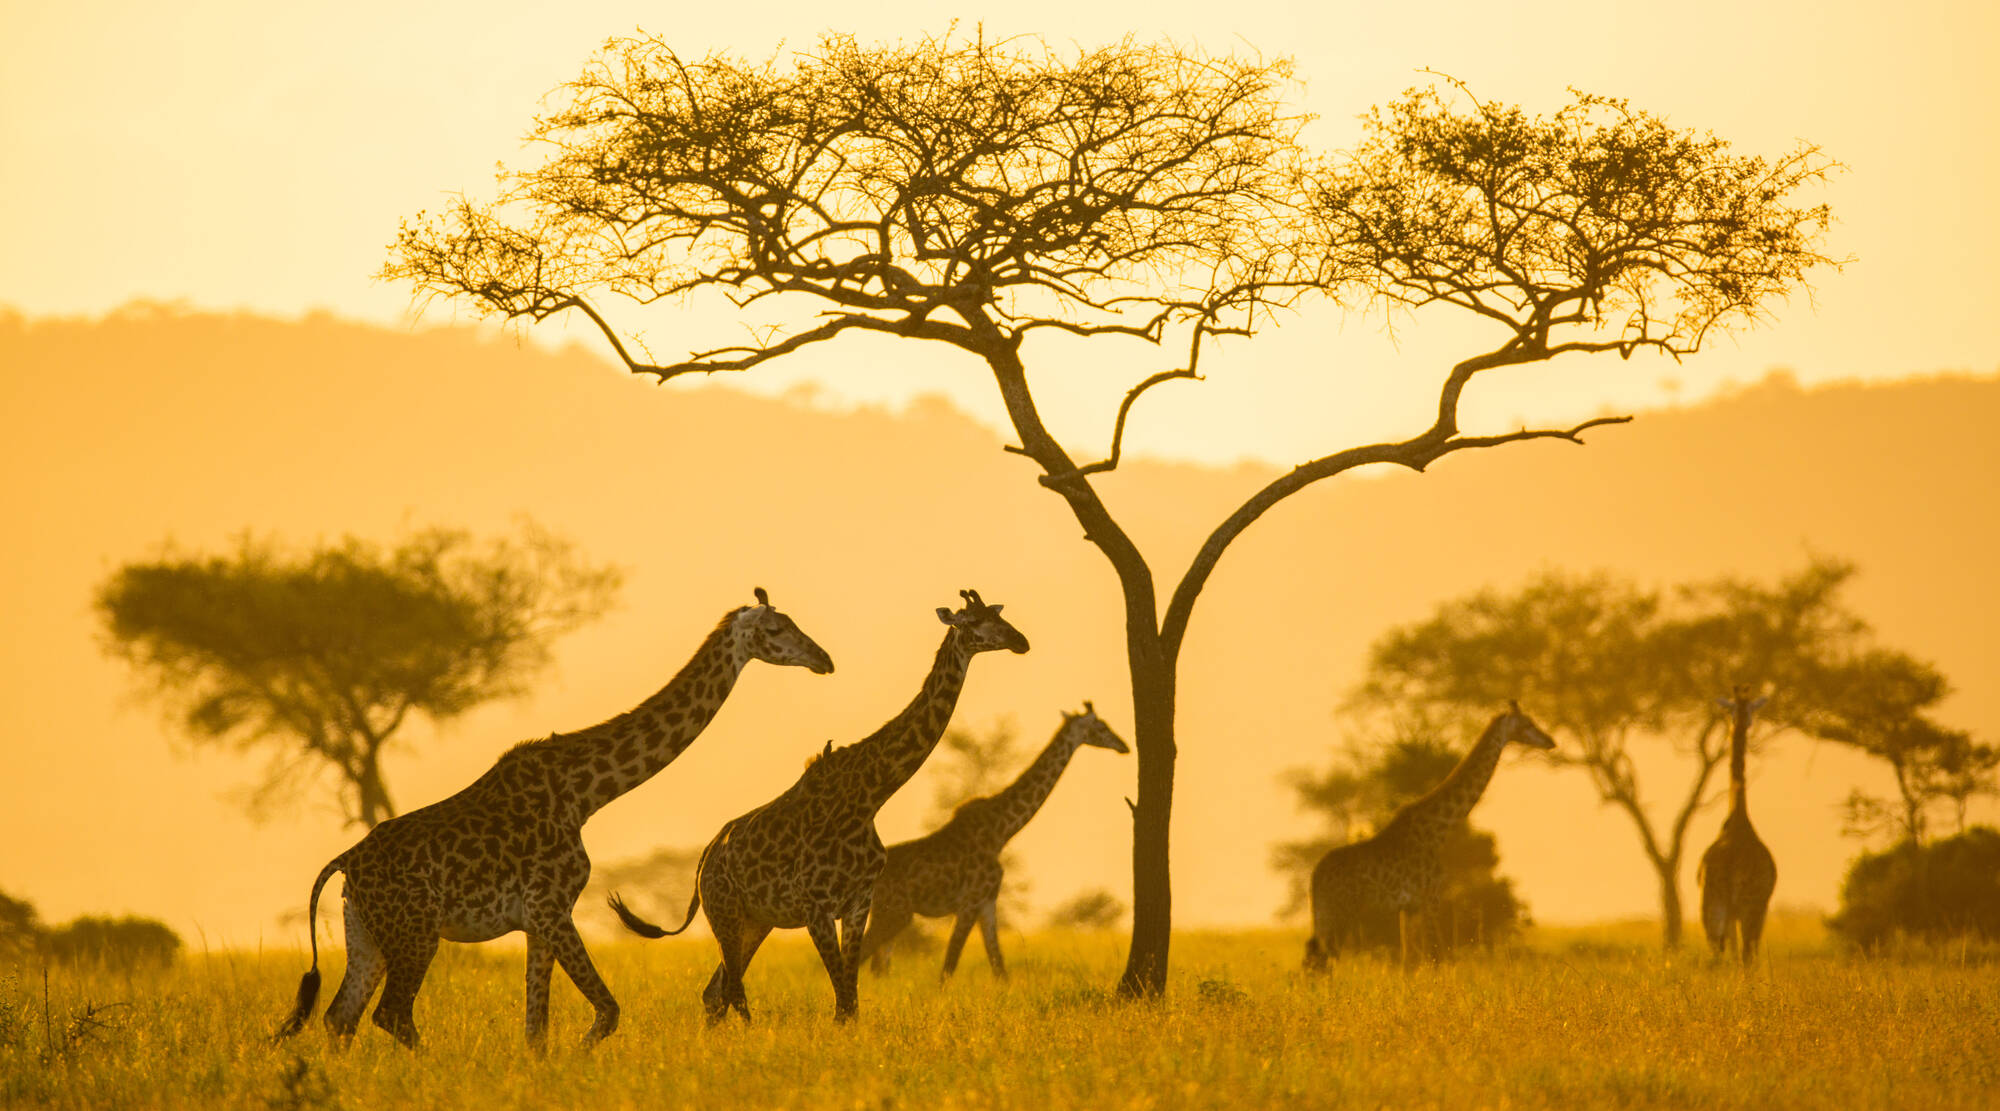 zimbabwe safari